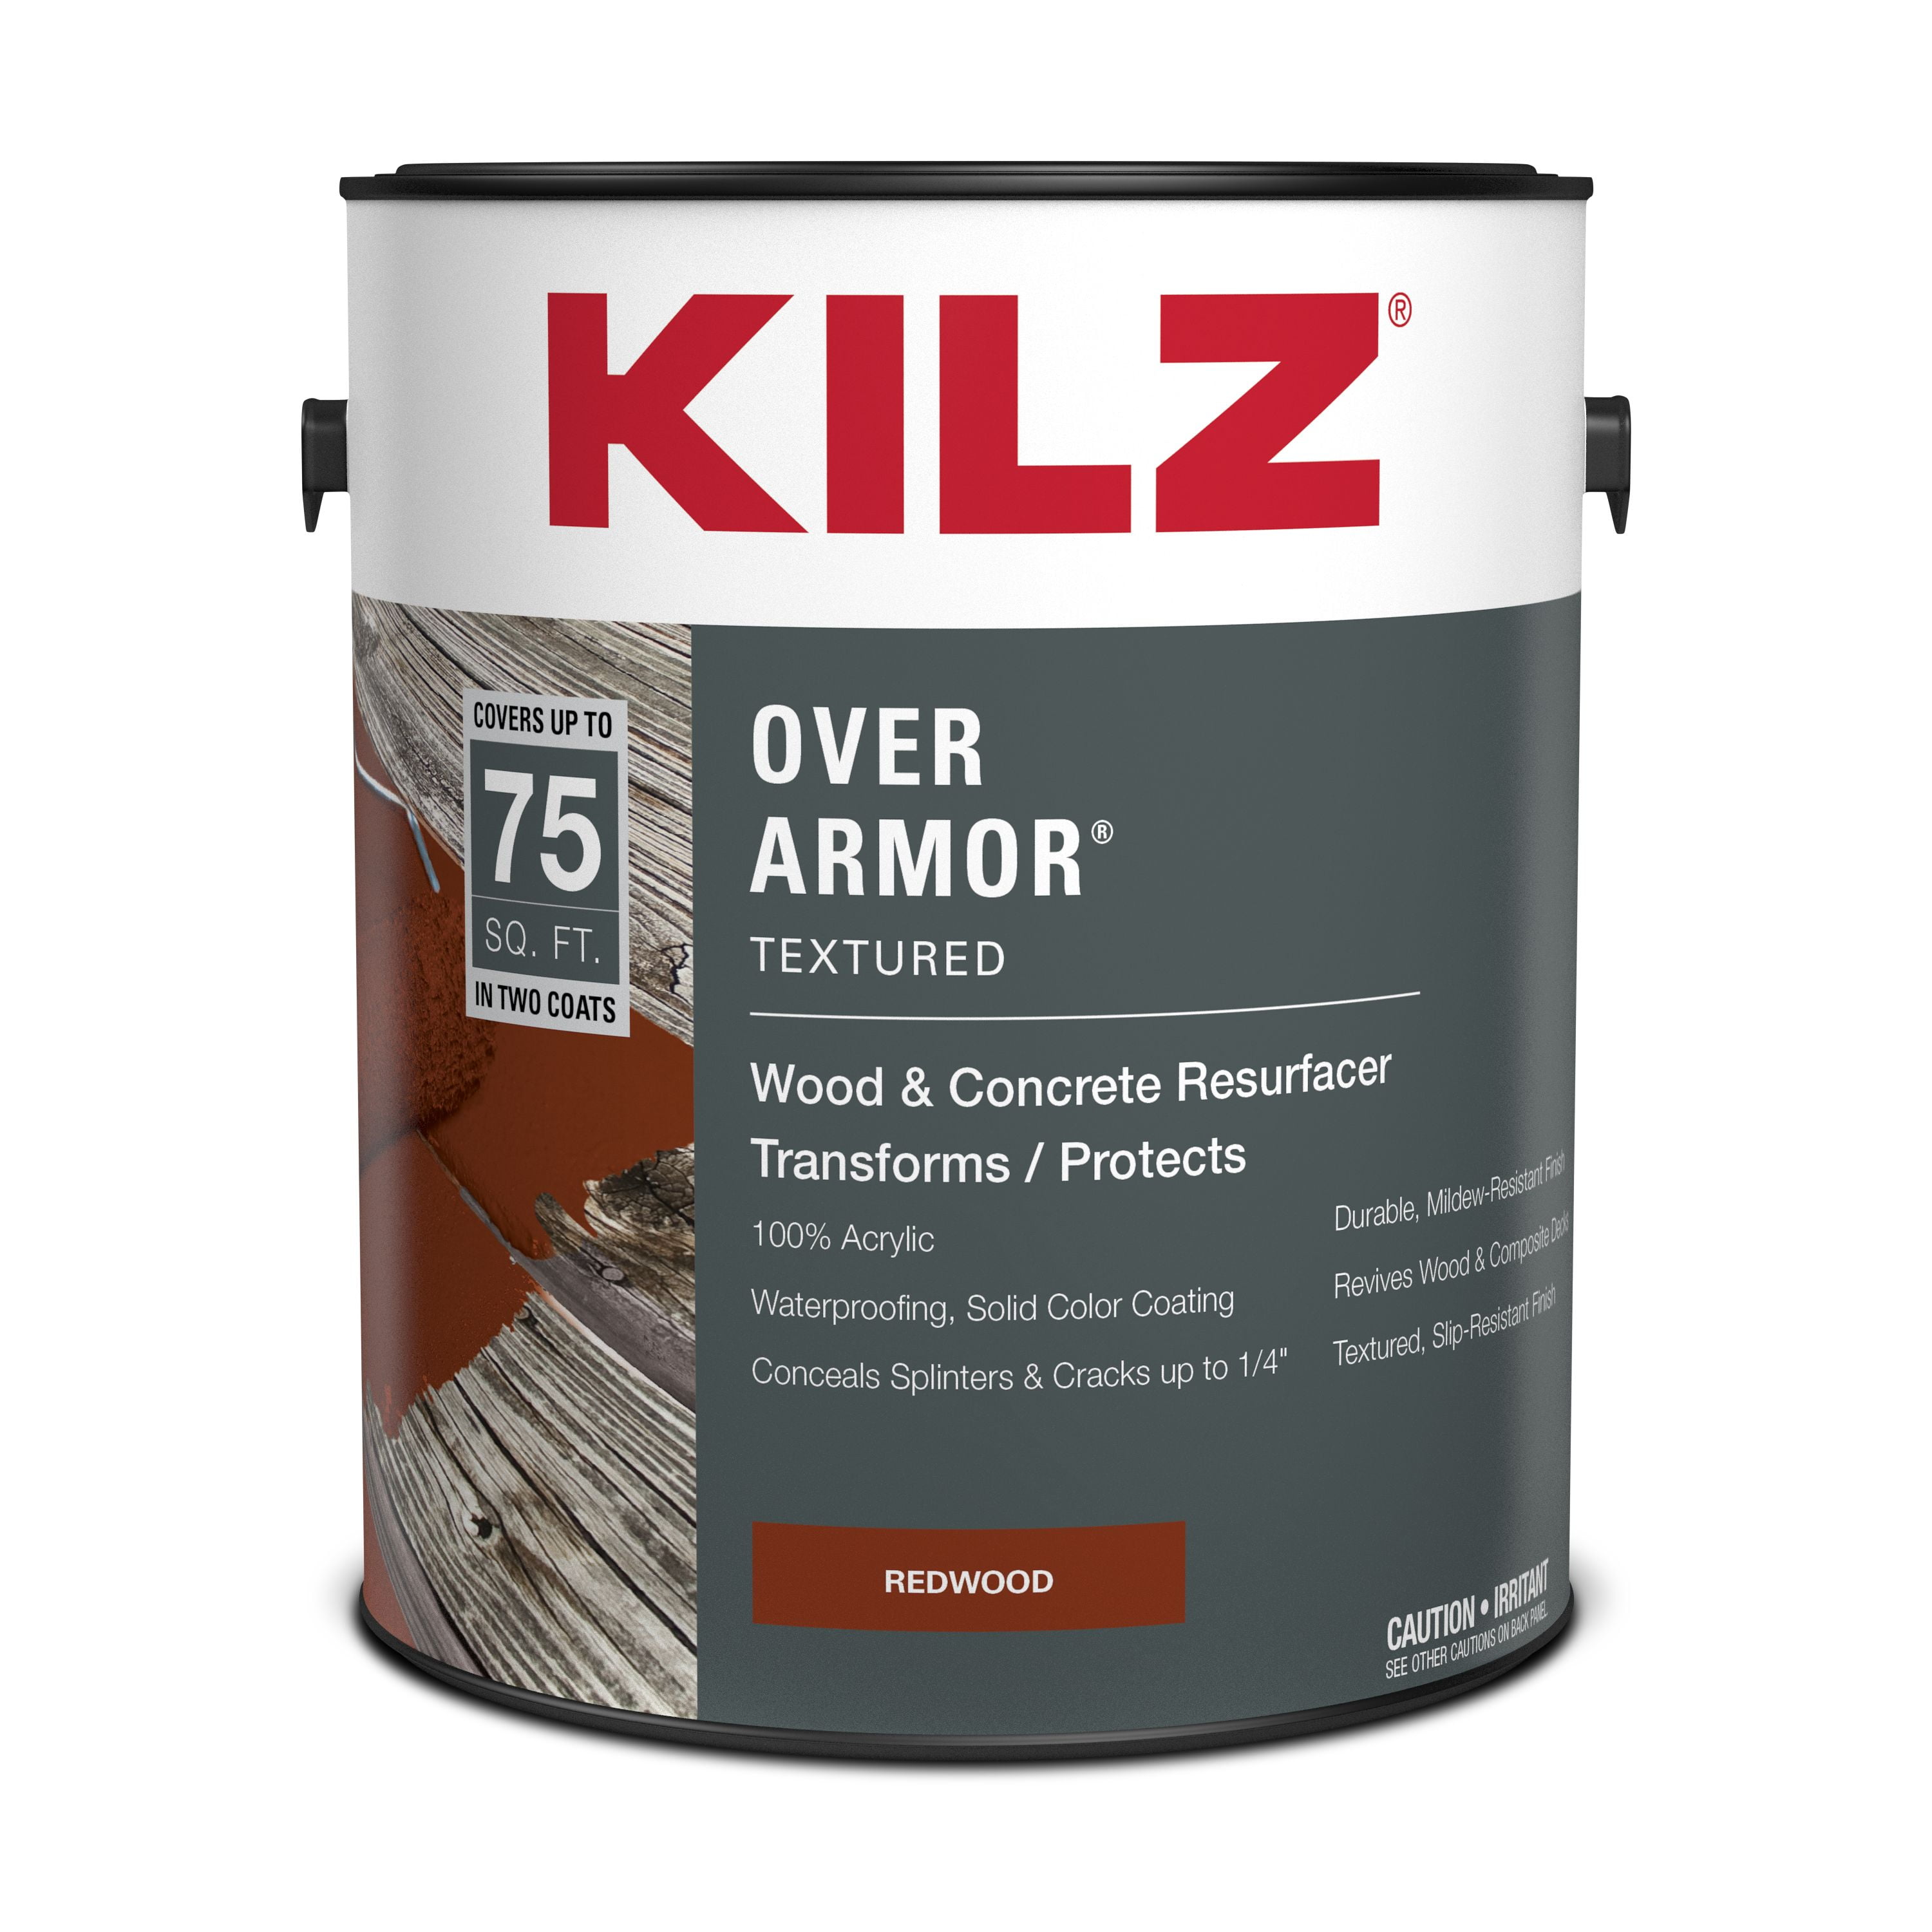 KILZ Over Armor Wood & Concrete Resurfacer, Exterior, Textured, Redwood, 1 Gallon